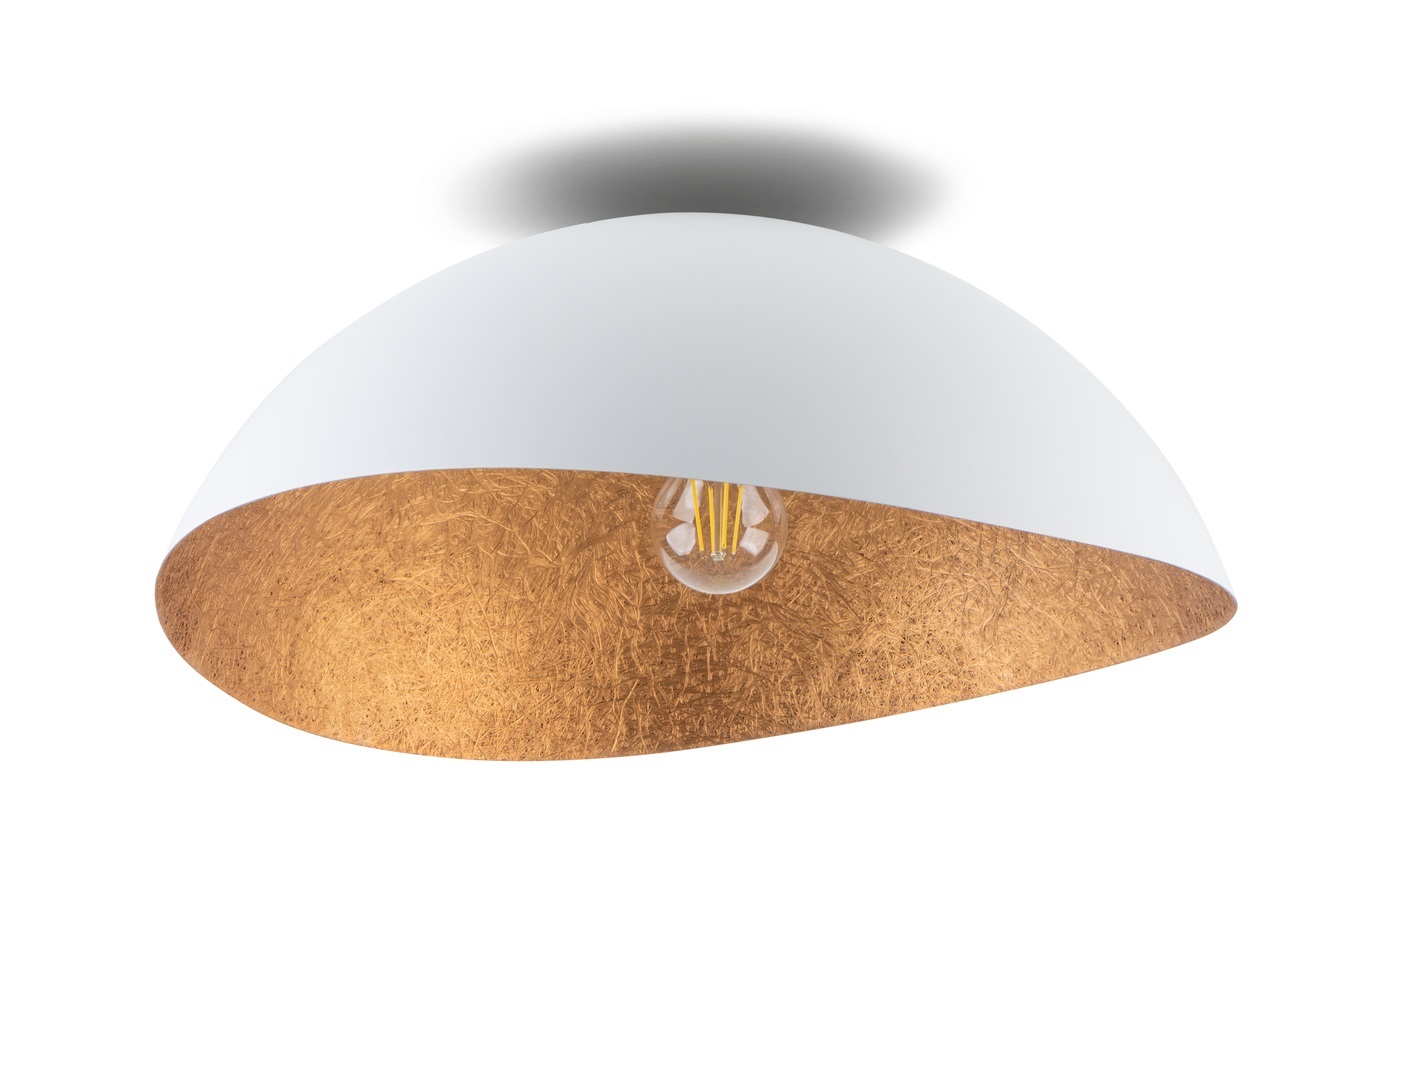 Lampa sufitowa plafon Solaris S SIGMA 40618